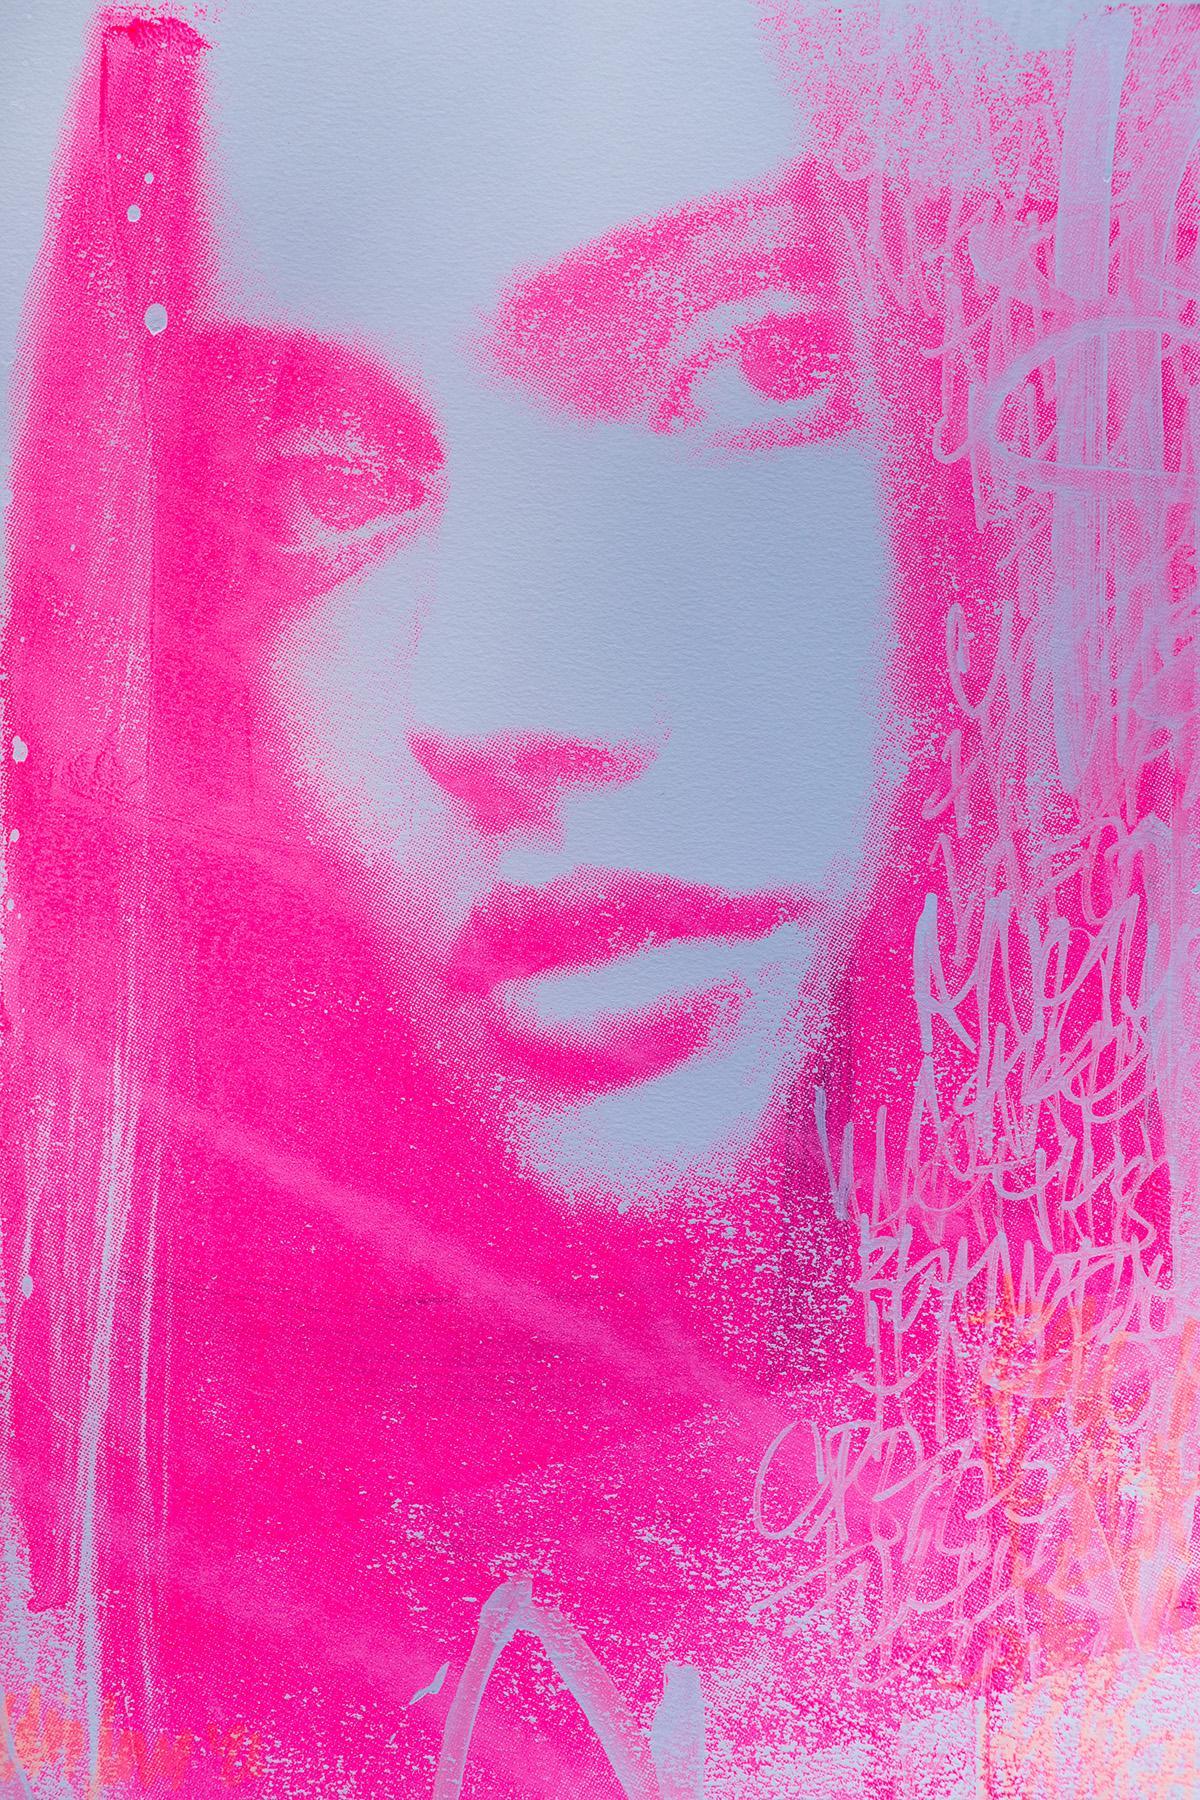 Addison Jones Portrait Painting - "Sparkling Rosé", Modern Pop Art Painting in Pink, 2022